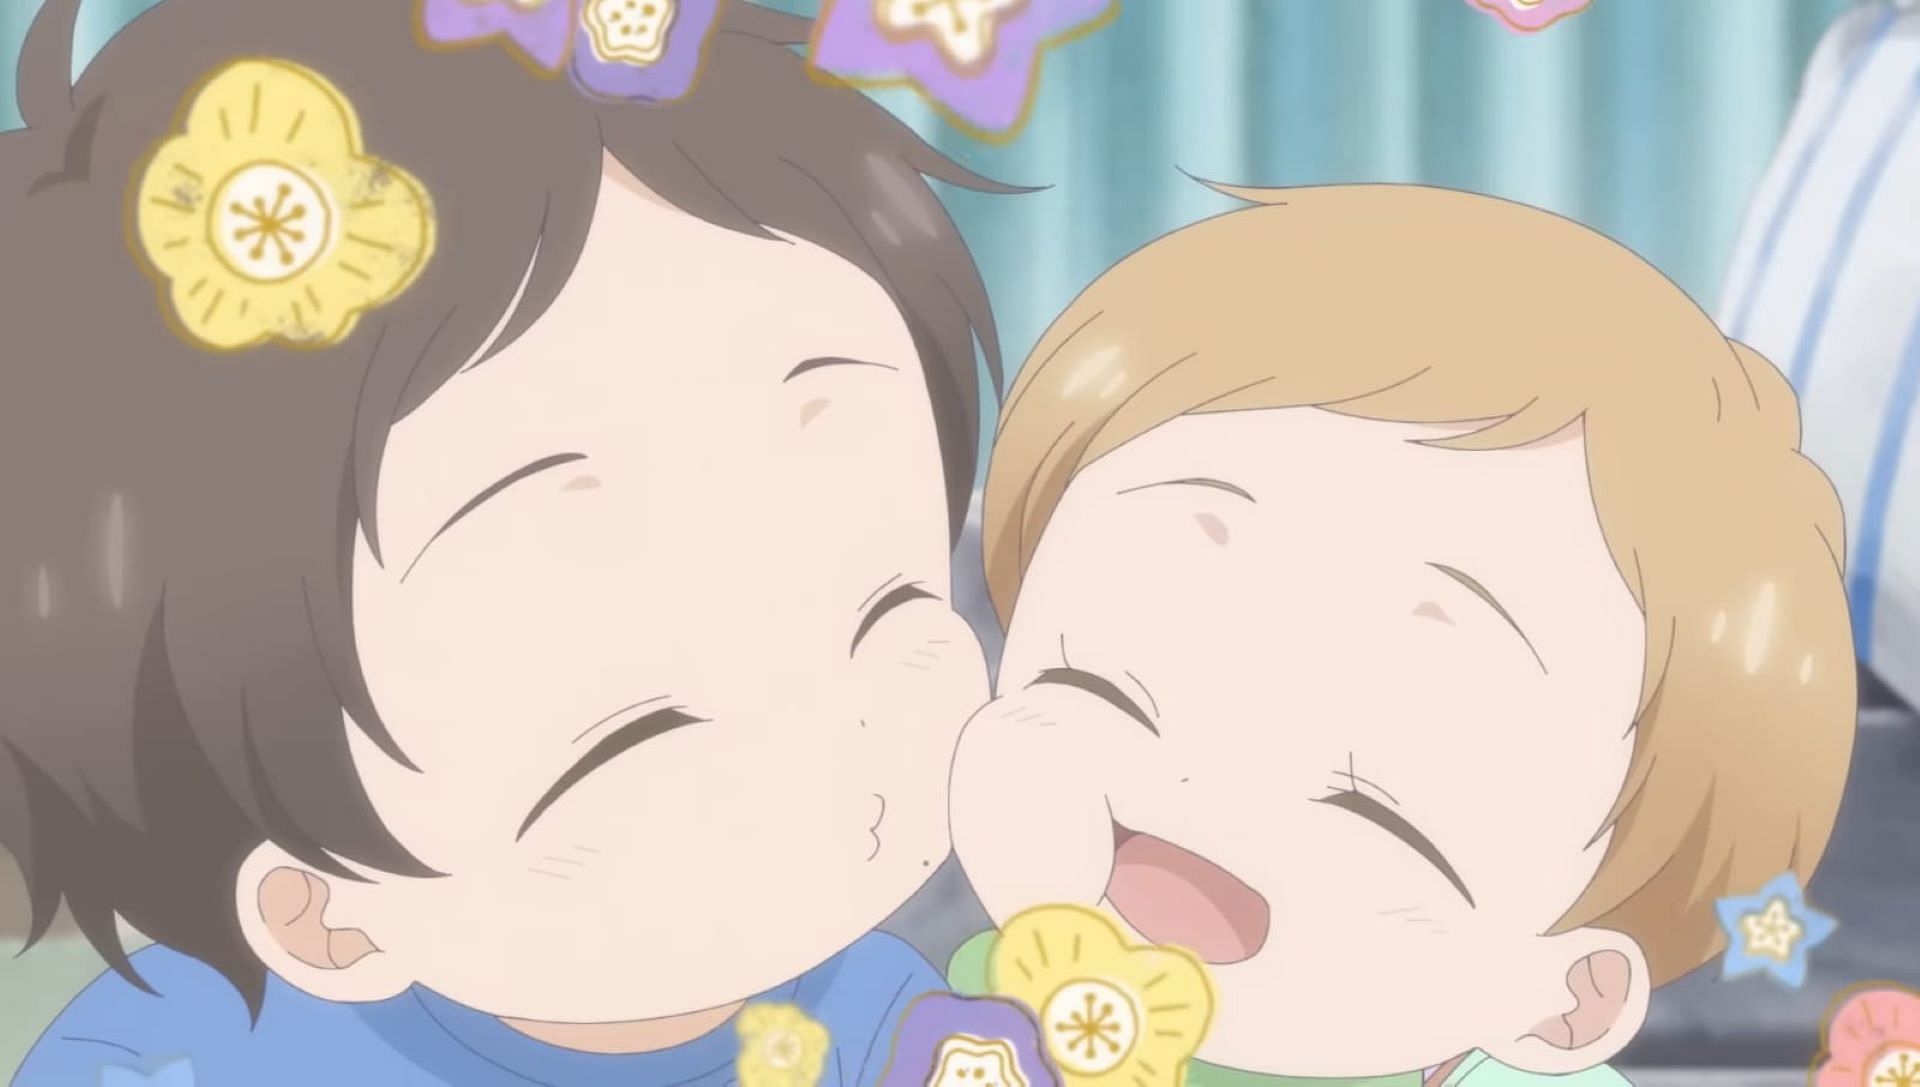 Hikari and his sister, Hinata, as seen in the anime (Image via Studio DEEN)